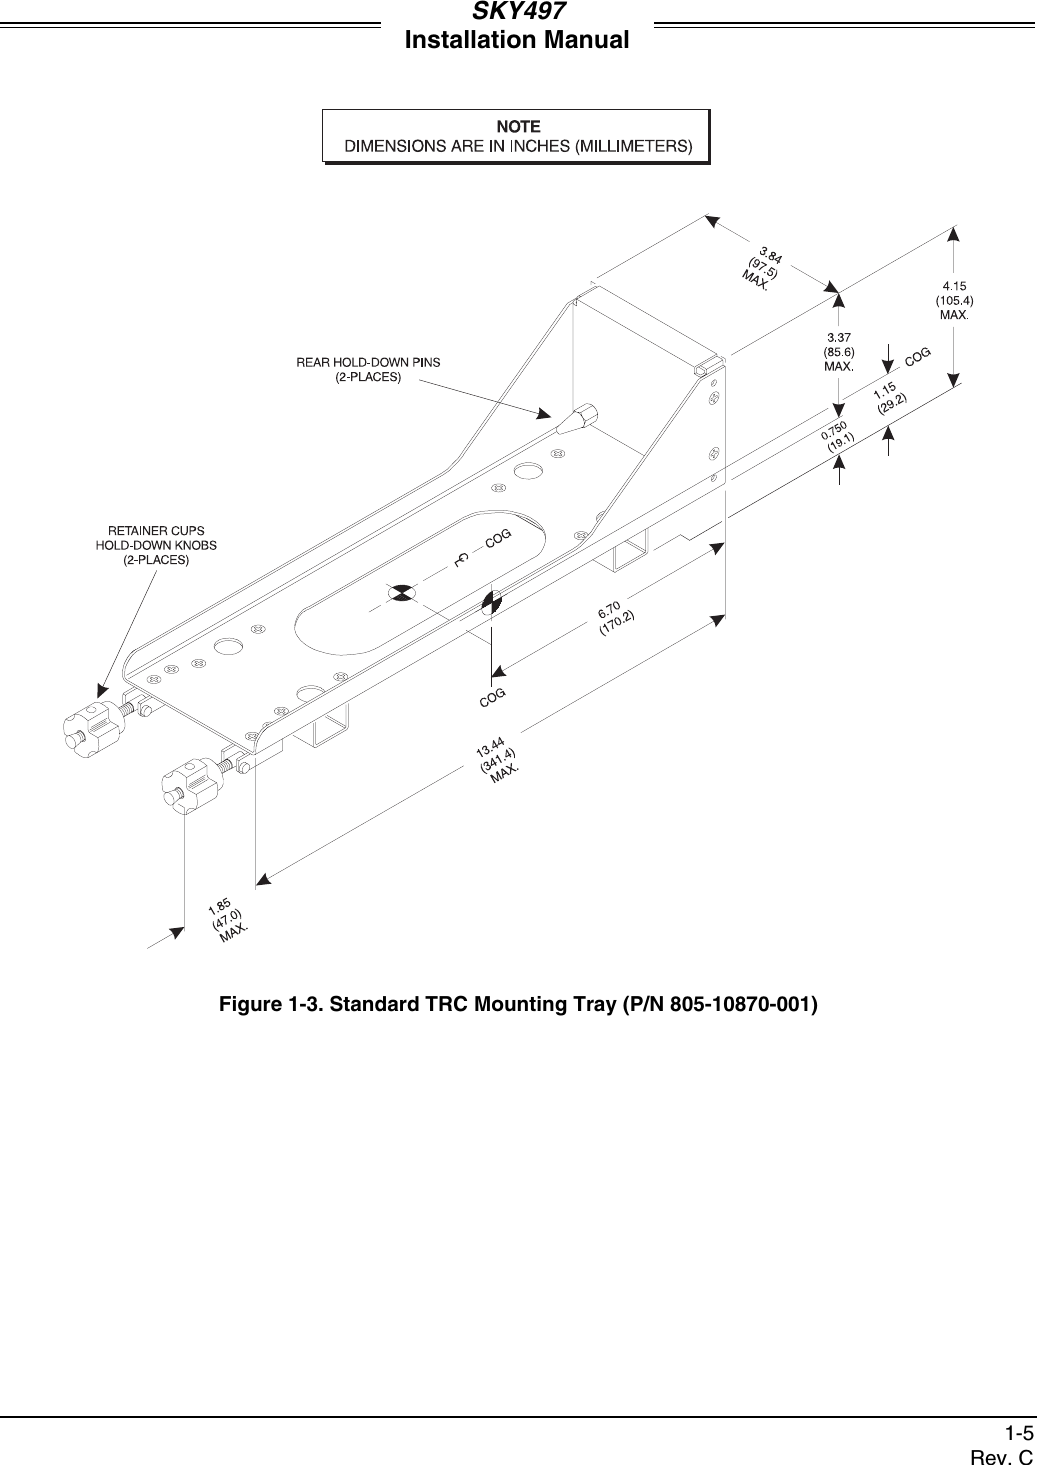 SKY497Installation Manual1-5Rev. CFigure 1-3. Standard TRC Mounting Tray (P/N 805-10870-001)